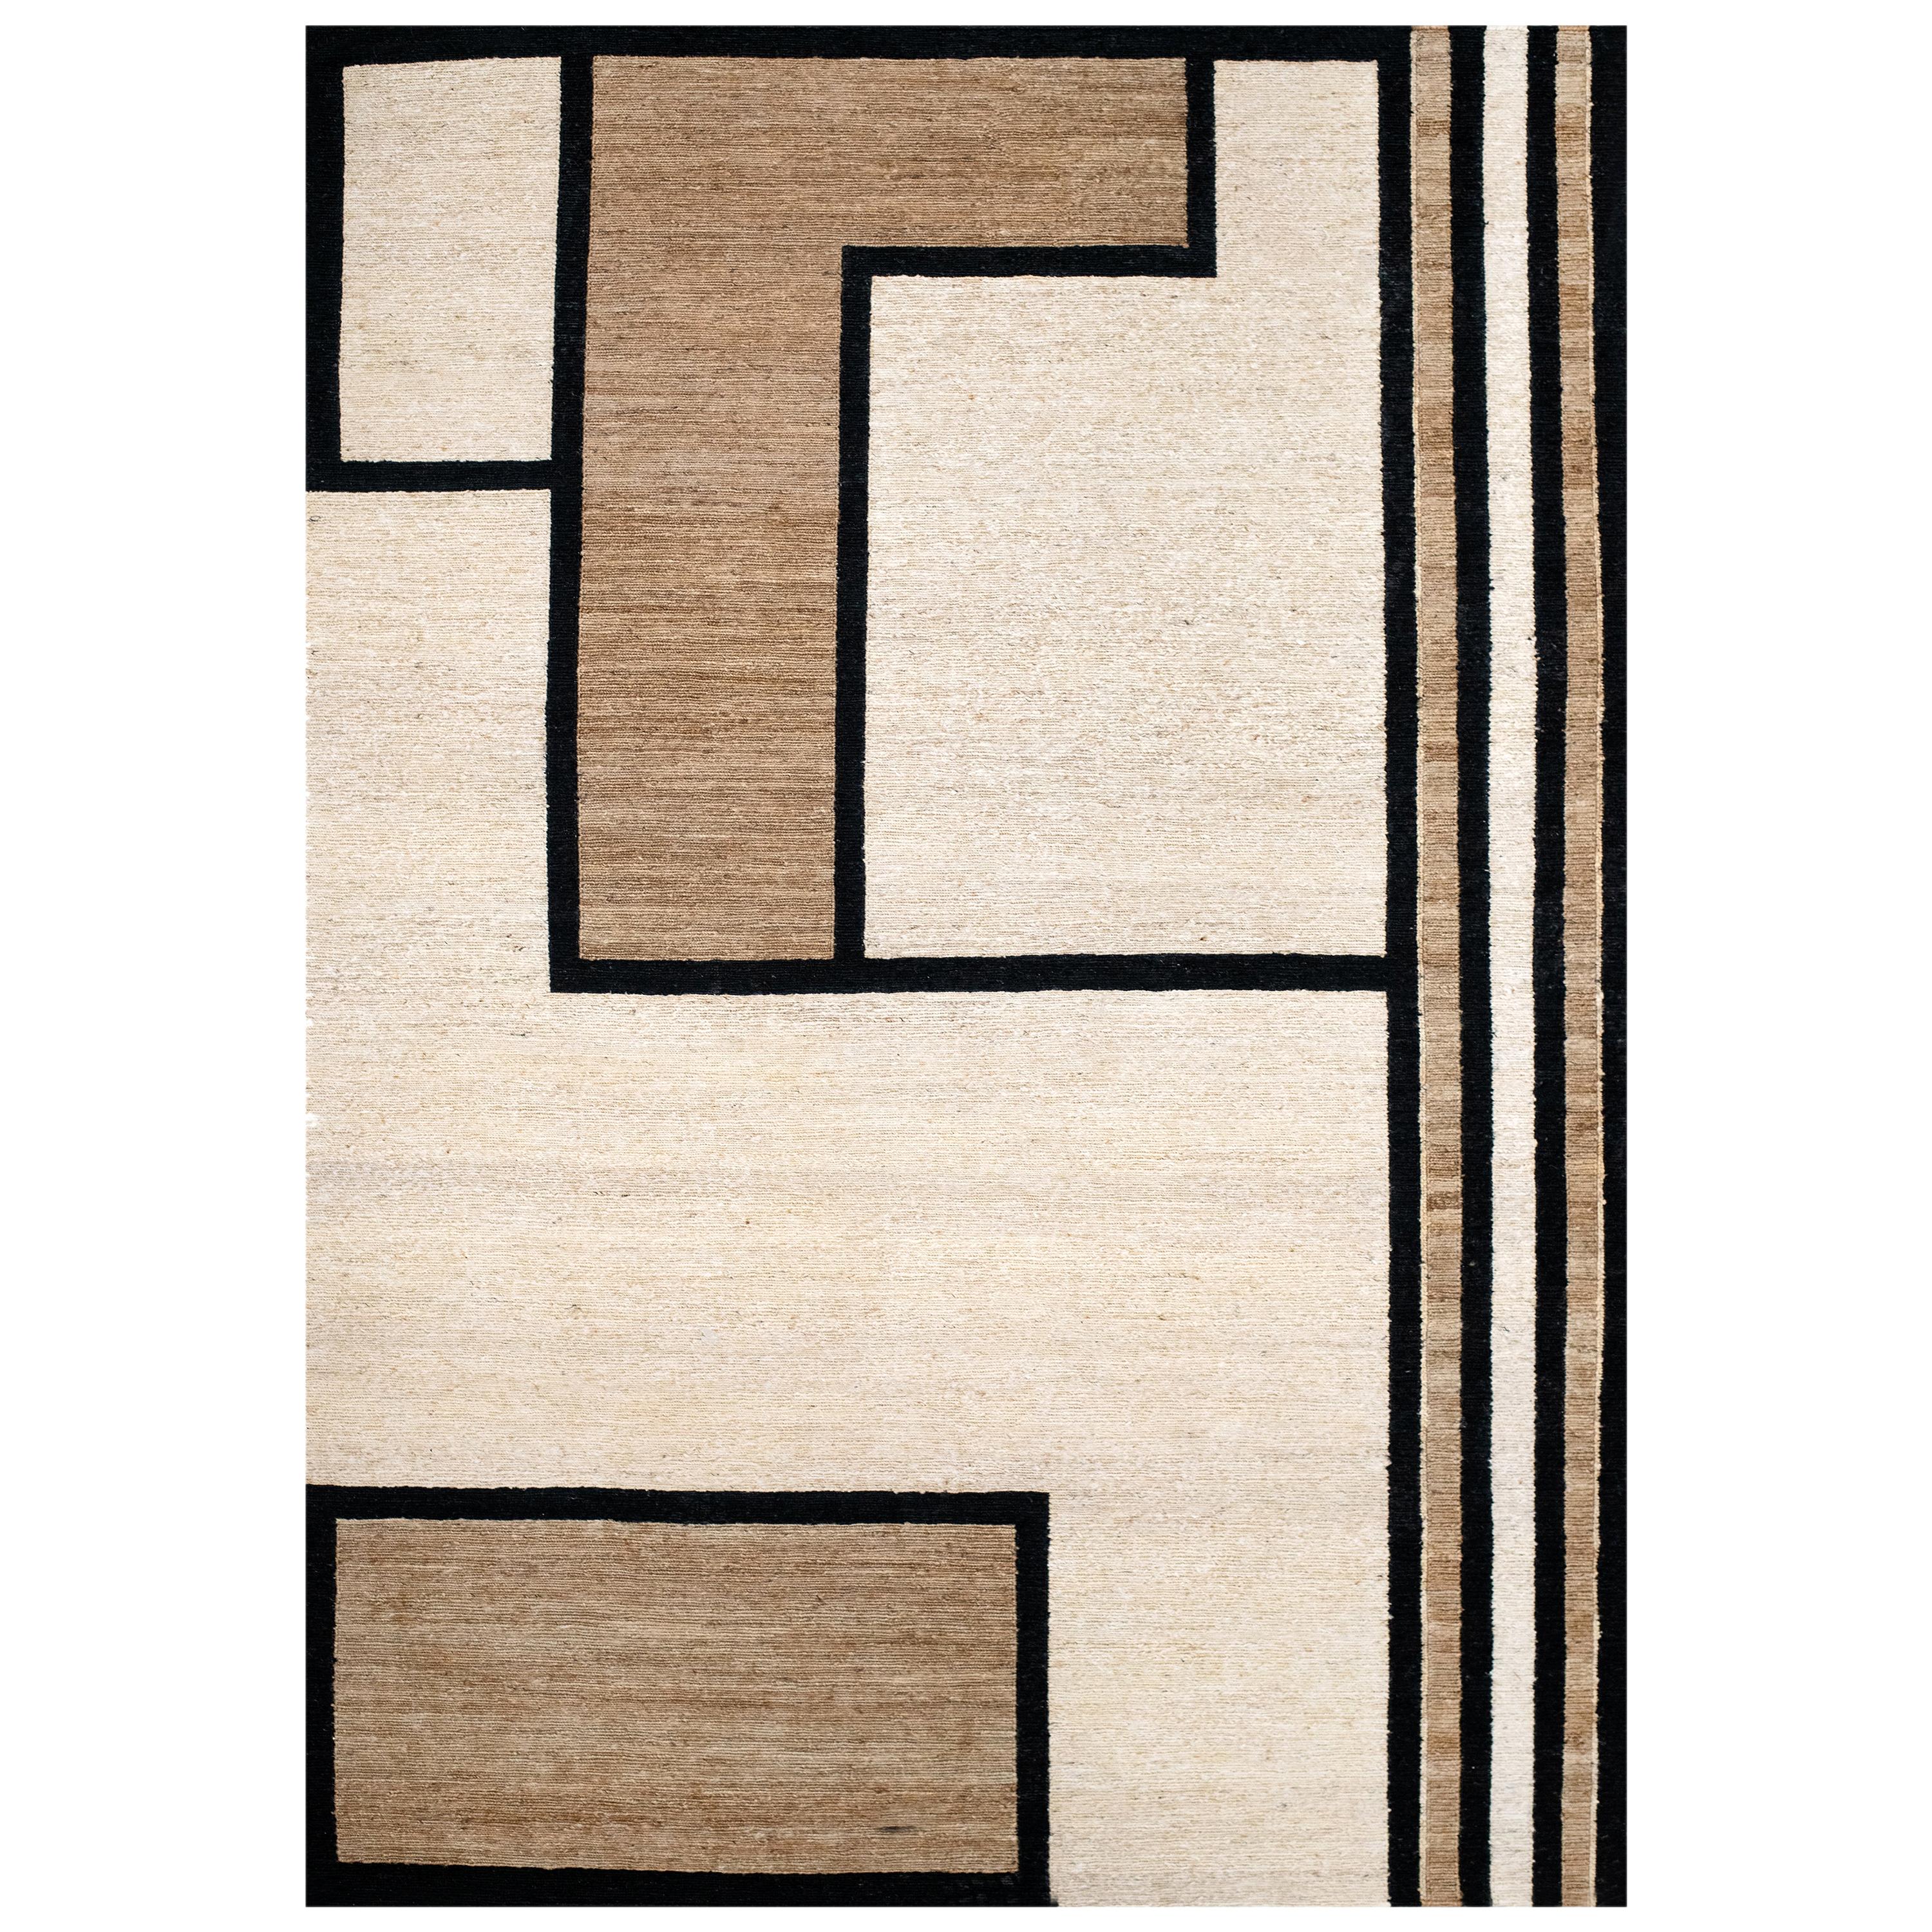 Modern Hand Braided Jute Carpet Rug in Black Brown White Geometric